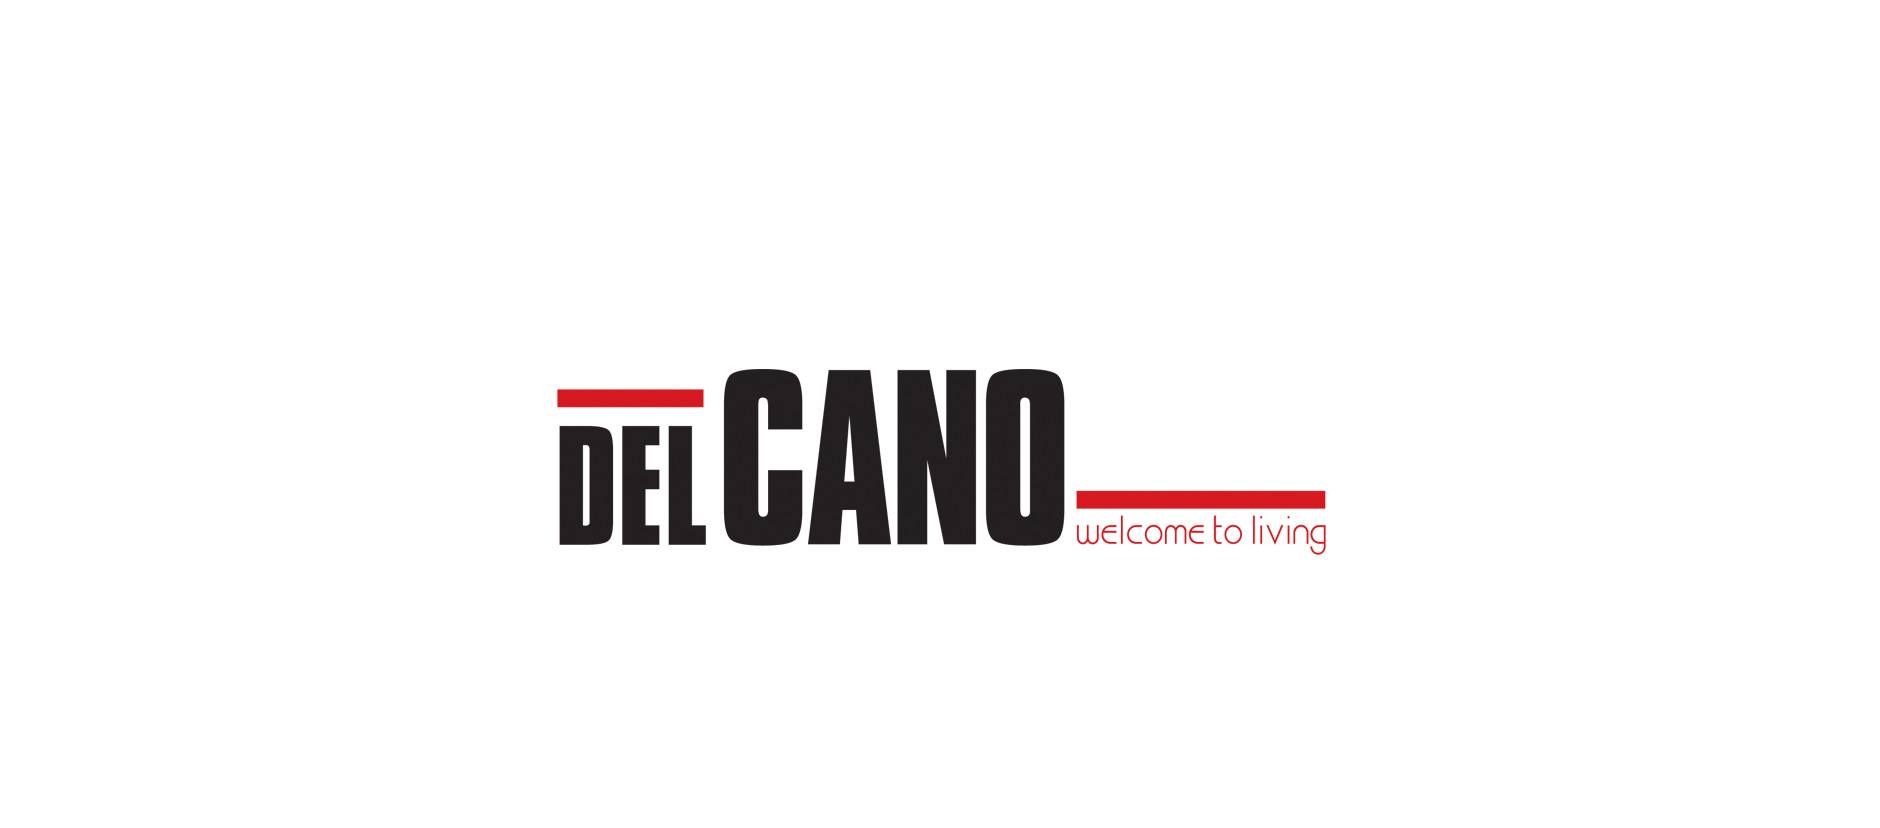 Restaurant Del Cano